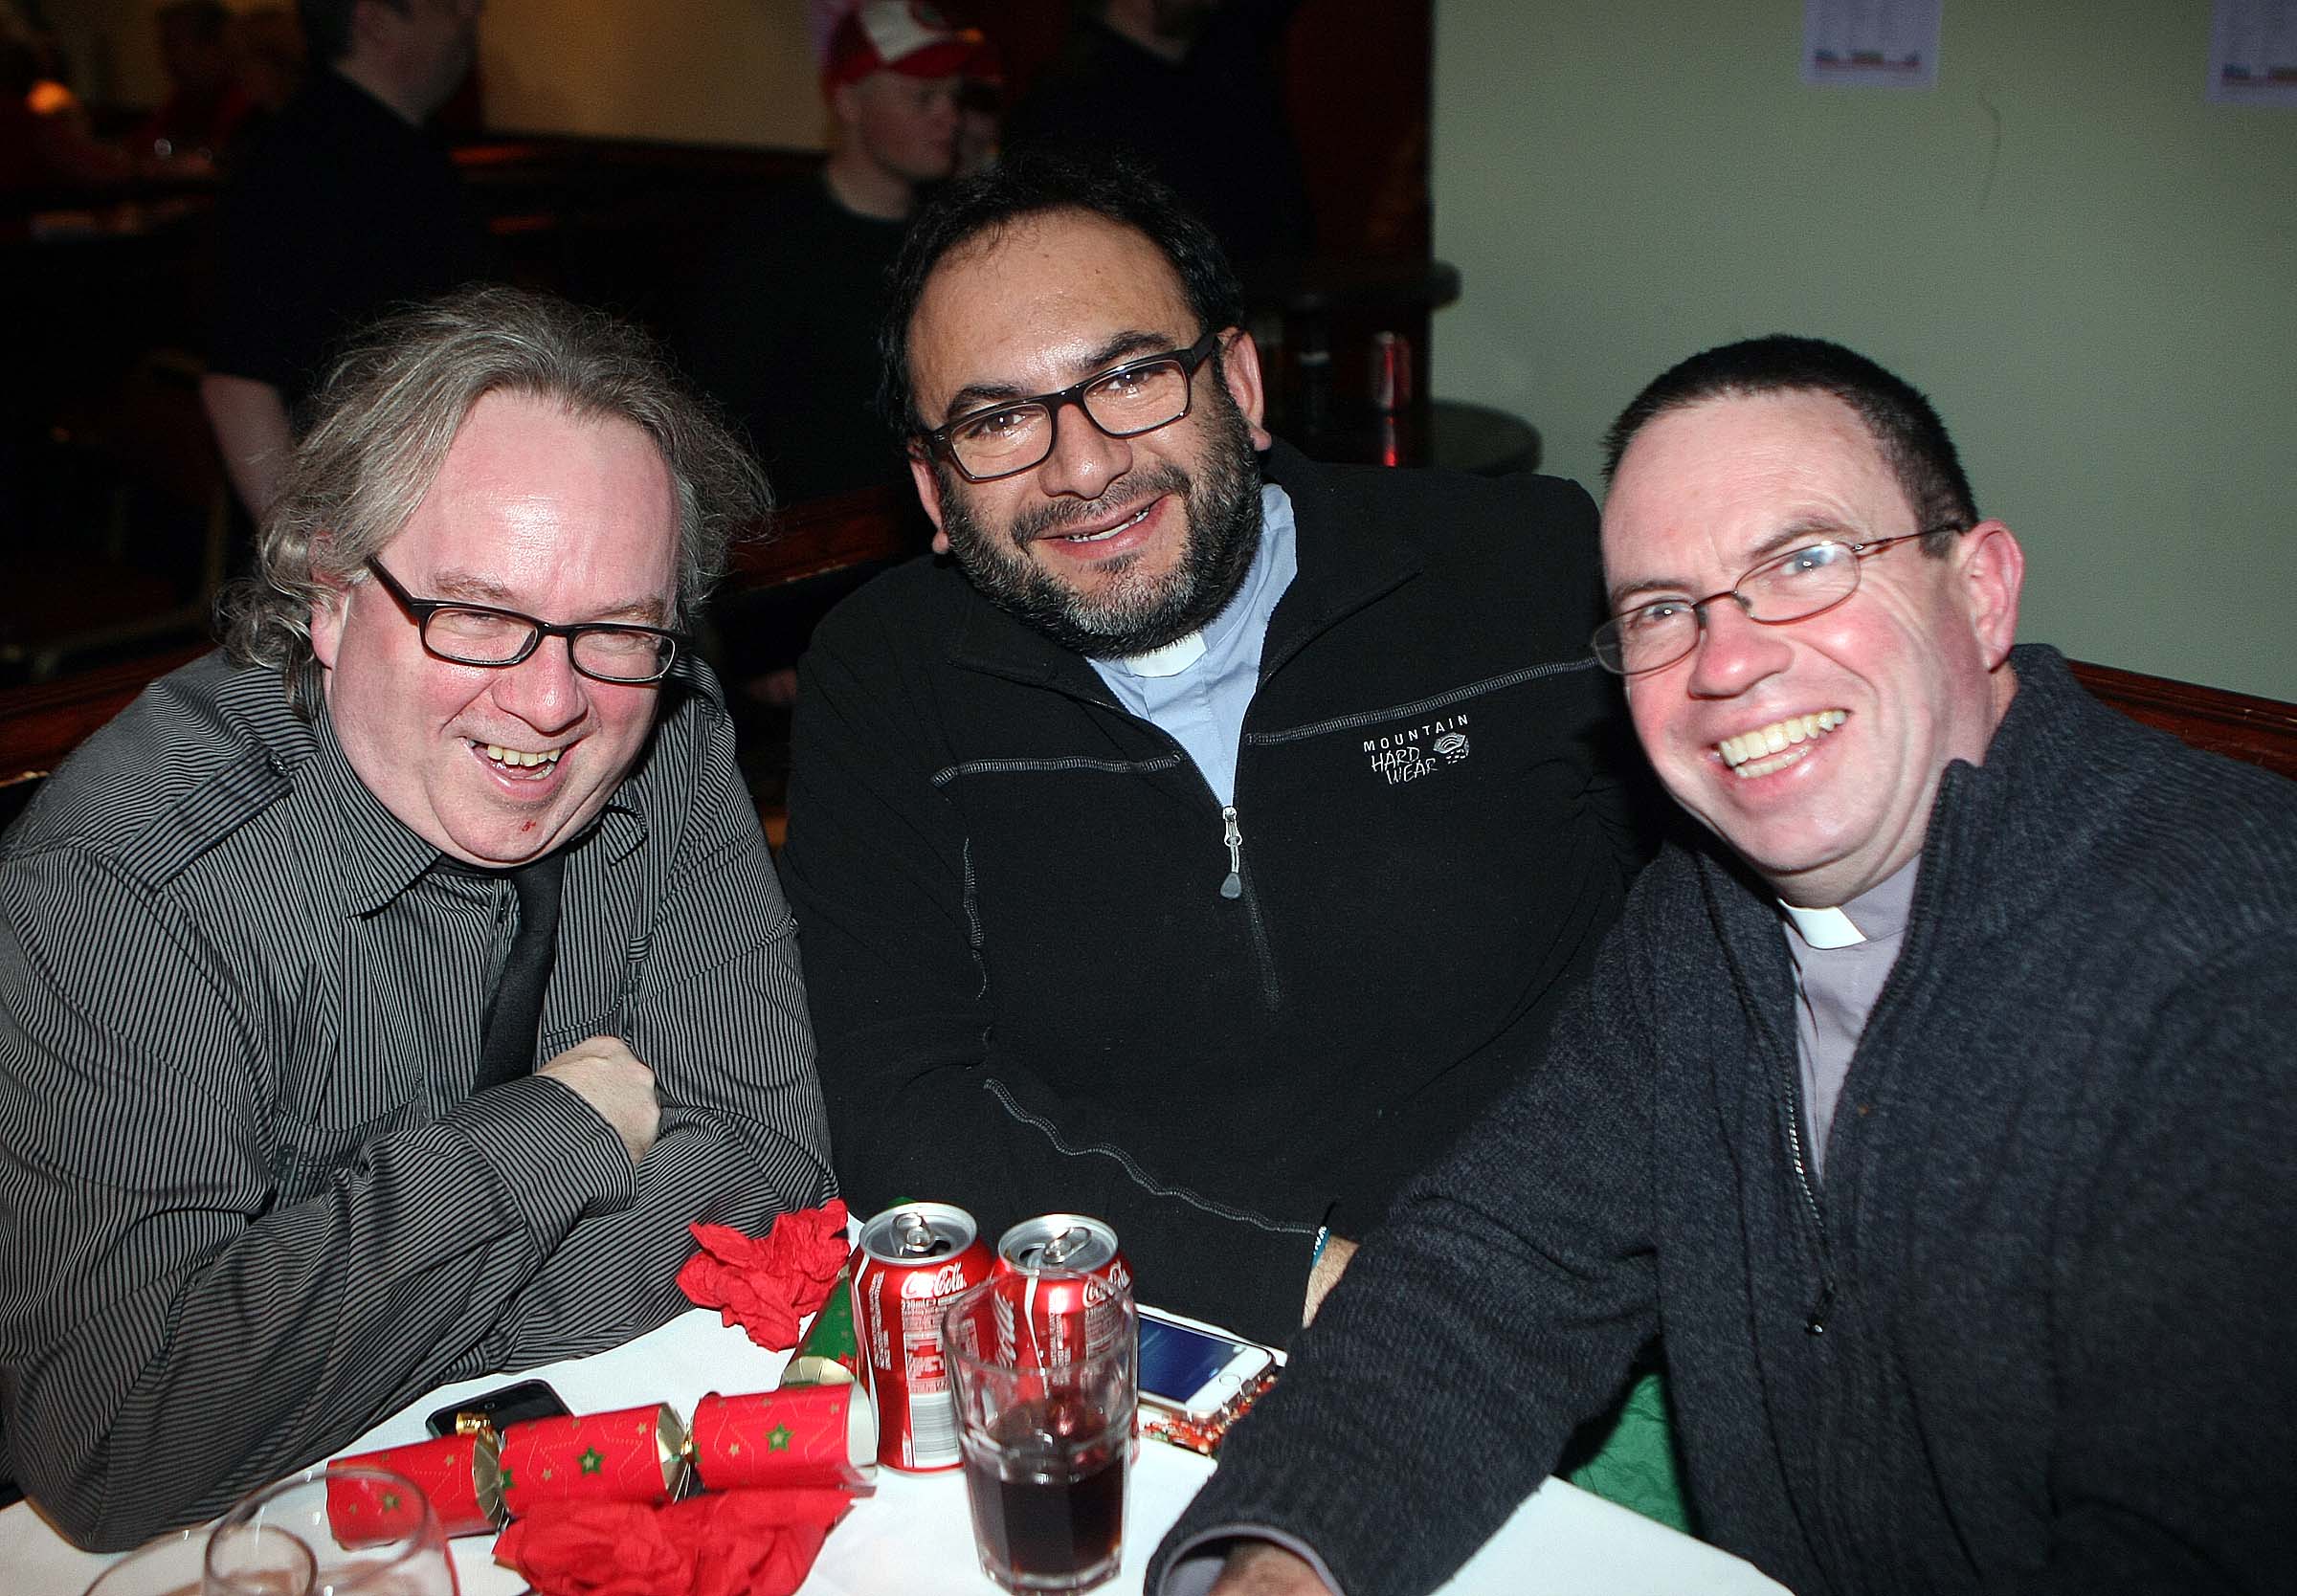 FESTIVAL FRIENDS: 4 Corners stalwarts Rev Steve Stockman, Rev Dario Leal and Father Martin Magill